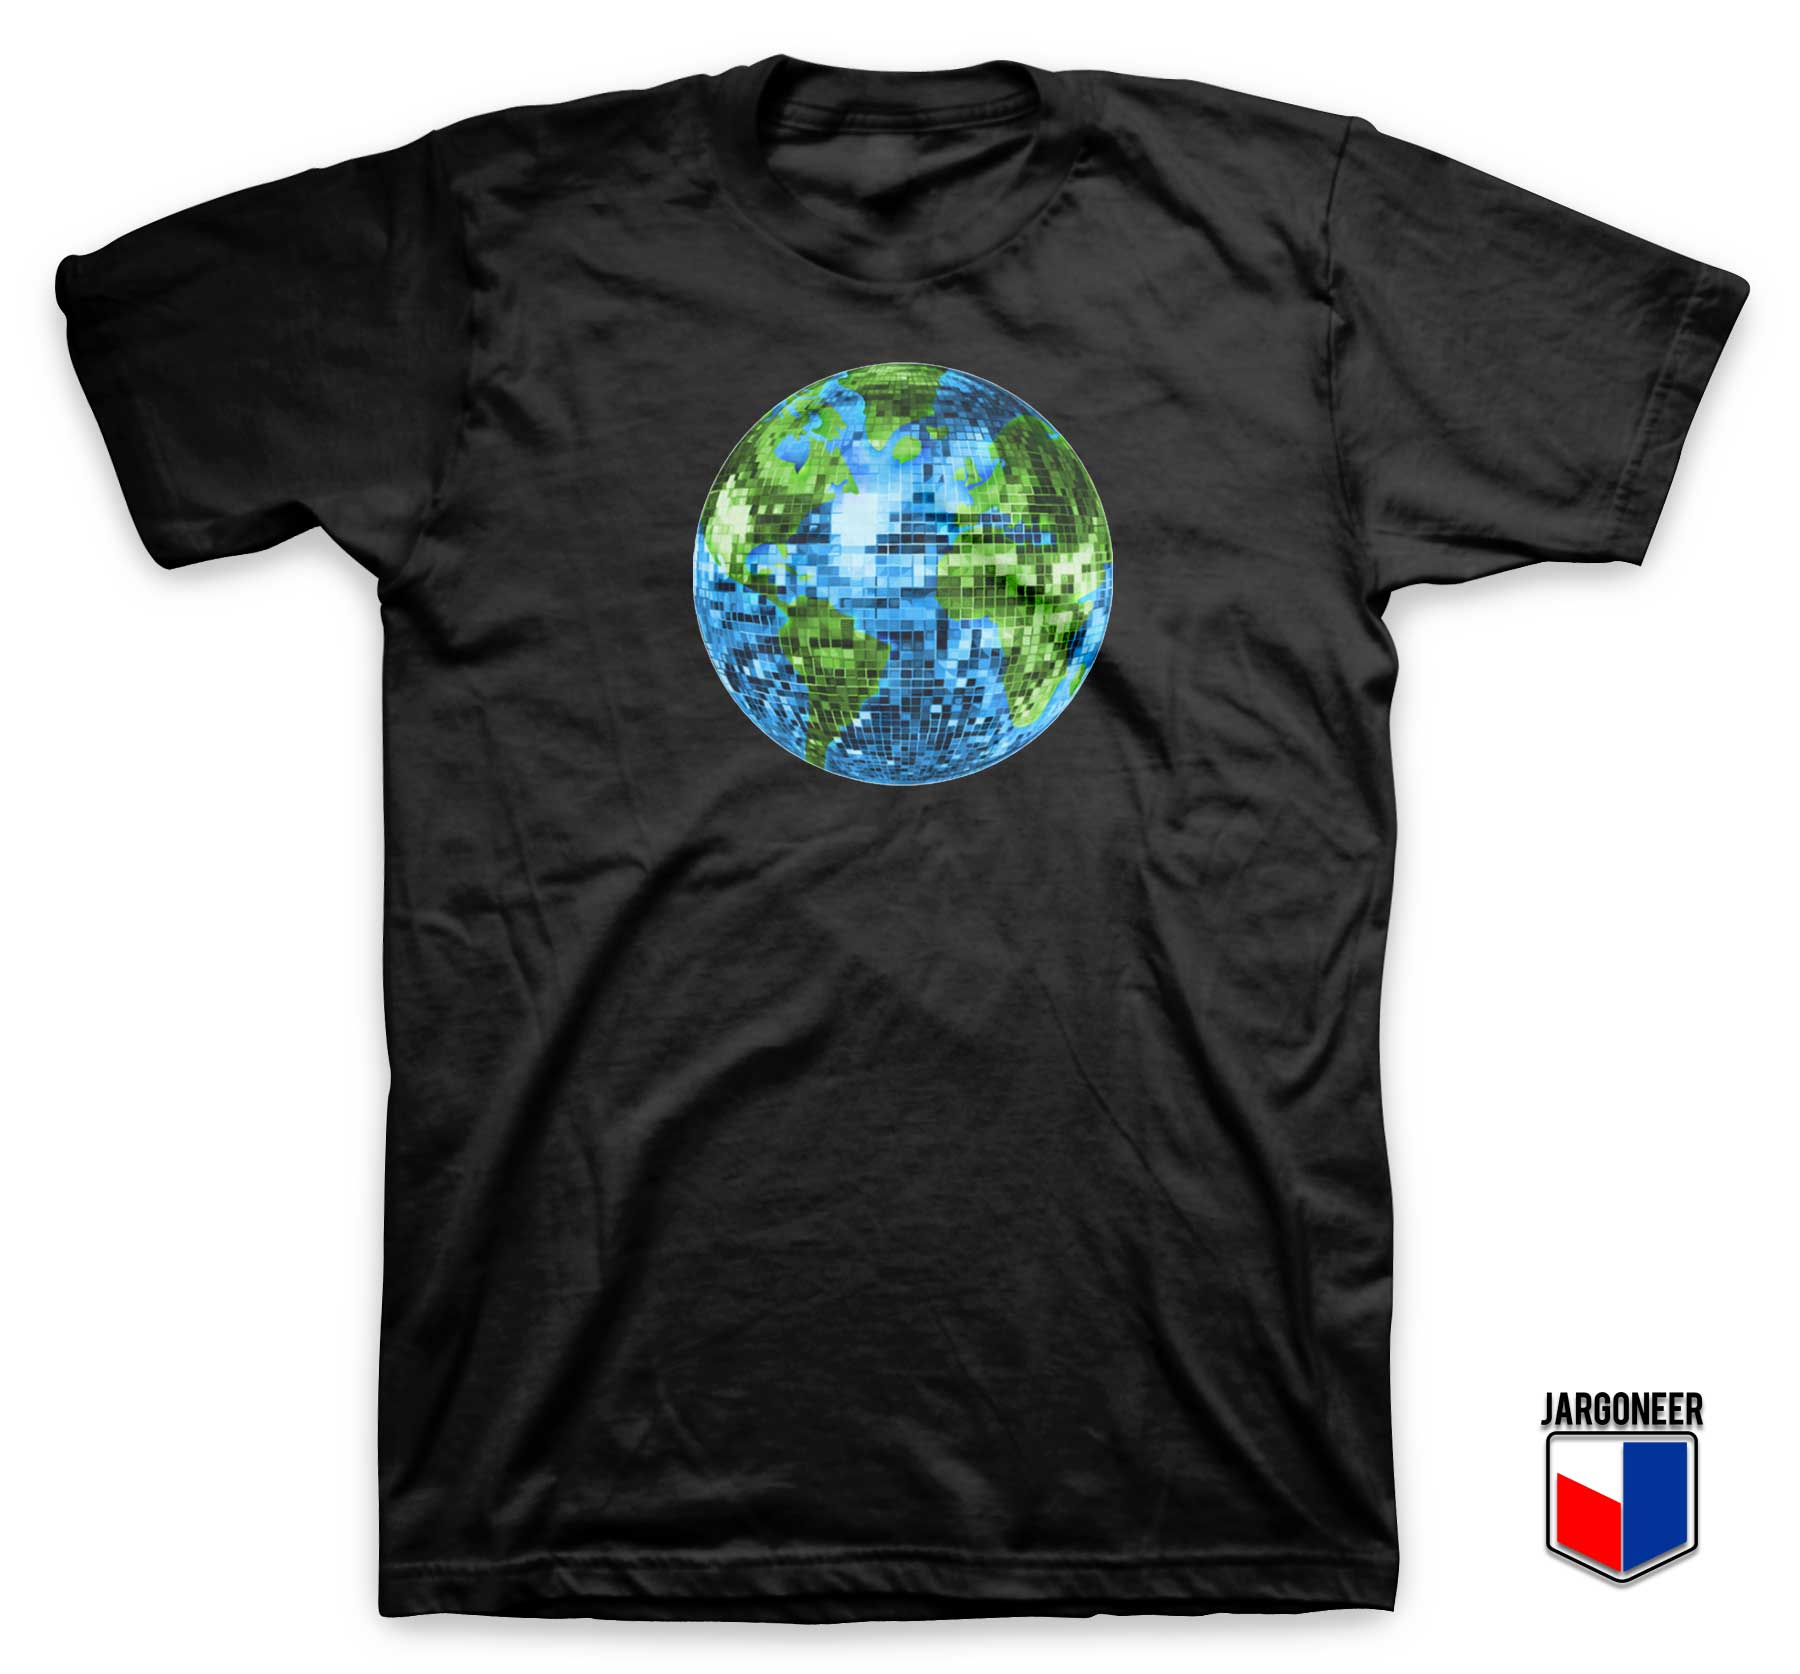 Galactic Disco Ball Planet Earth T Shirt - Shop Unique Graphic Cool Shirt Designs